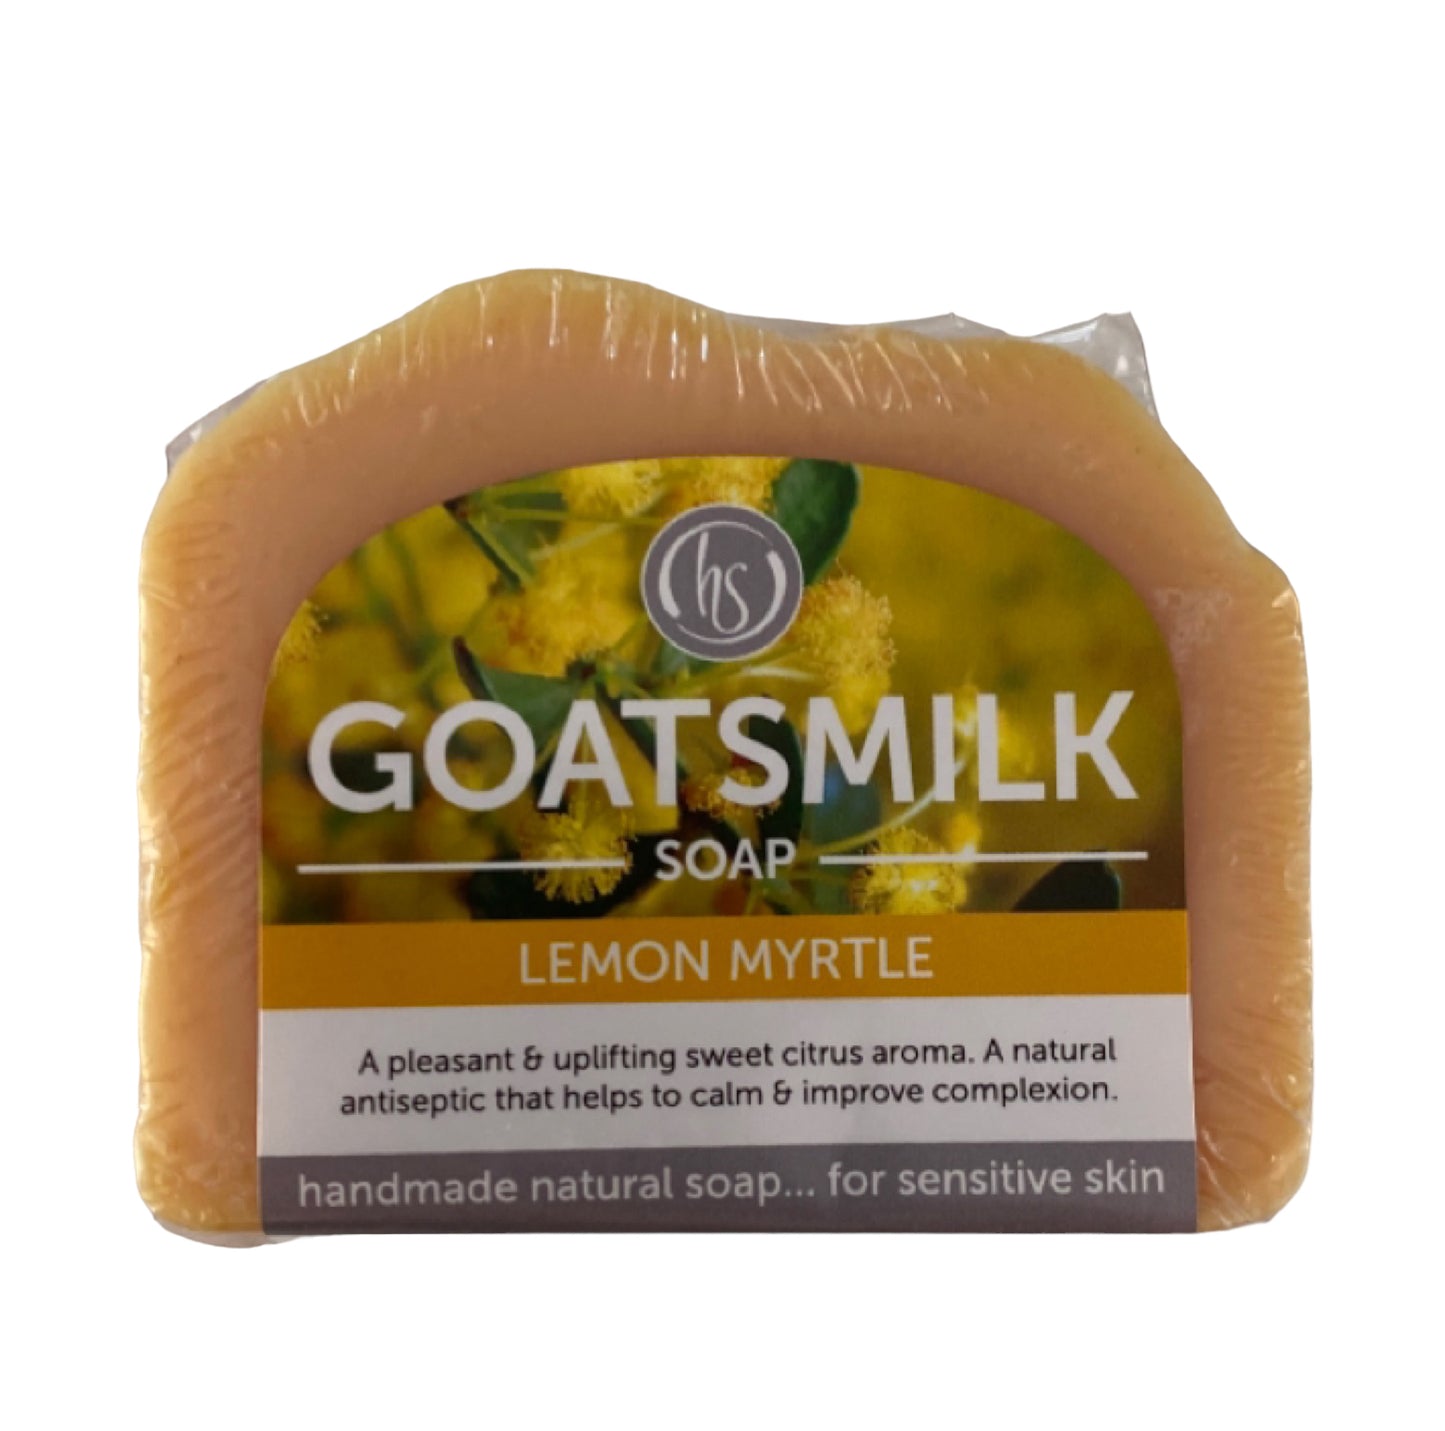 Garden Possible Gardener Stone Goatmilk Soap Gift